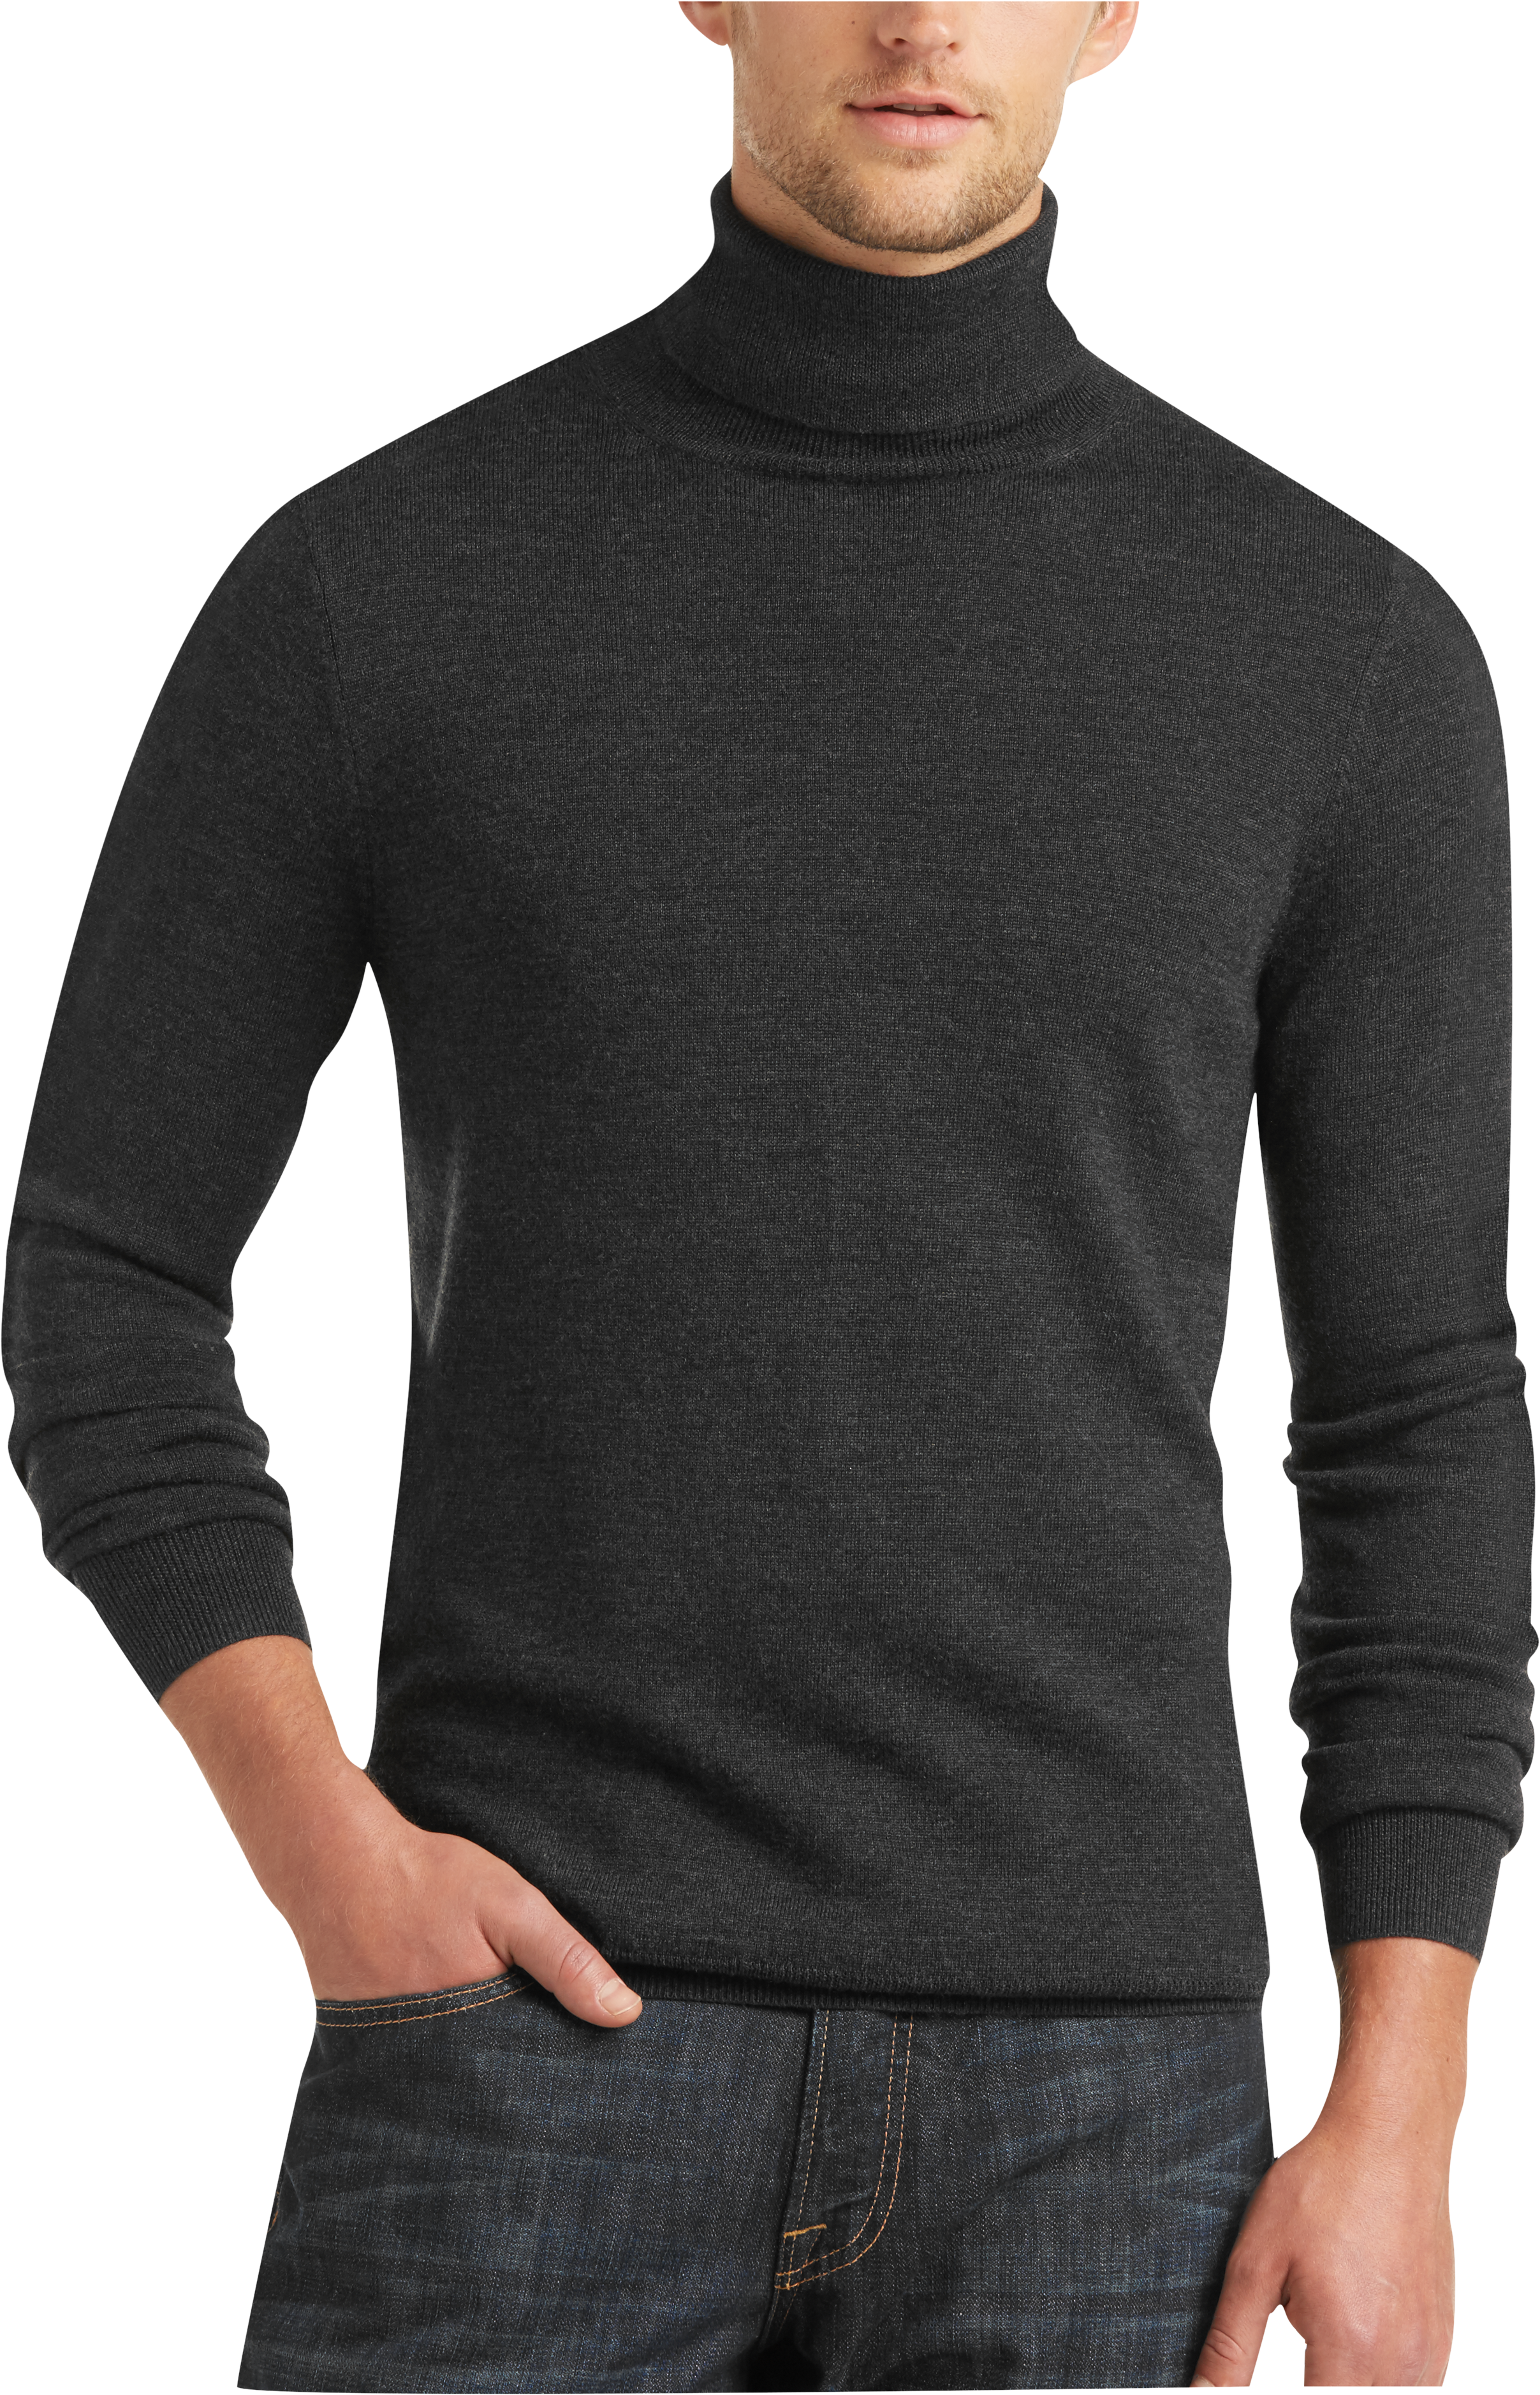 Joseph Abboud Charcoal Modern Fit Turtleneck Sweater - Men's Sweaters ...